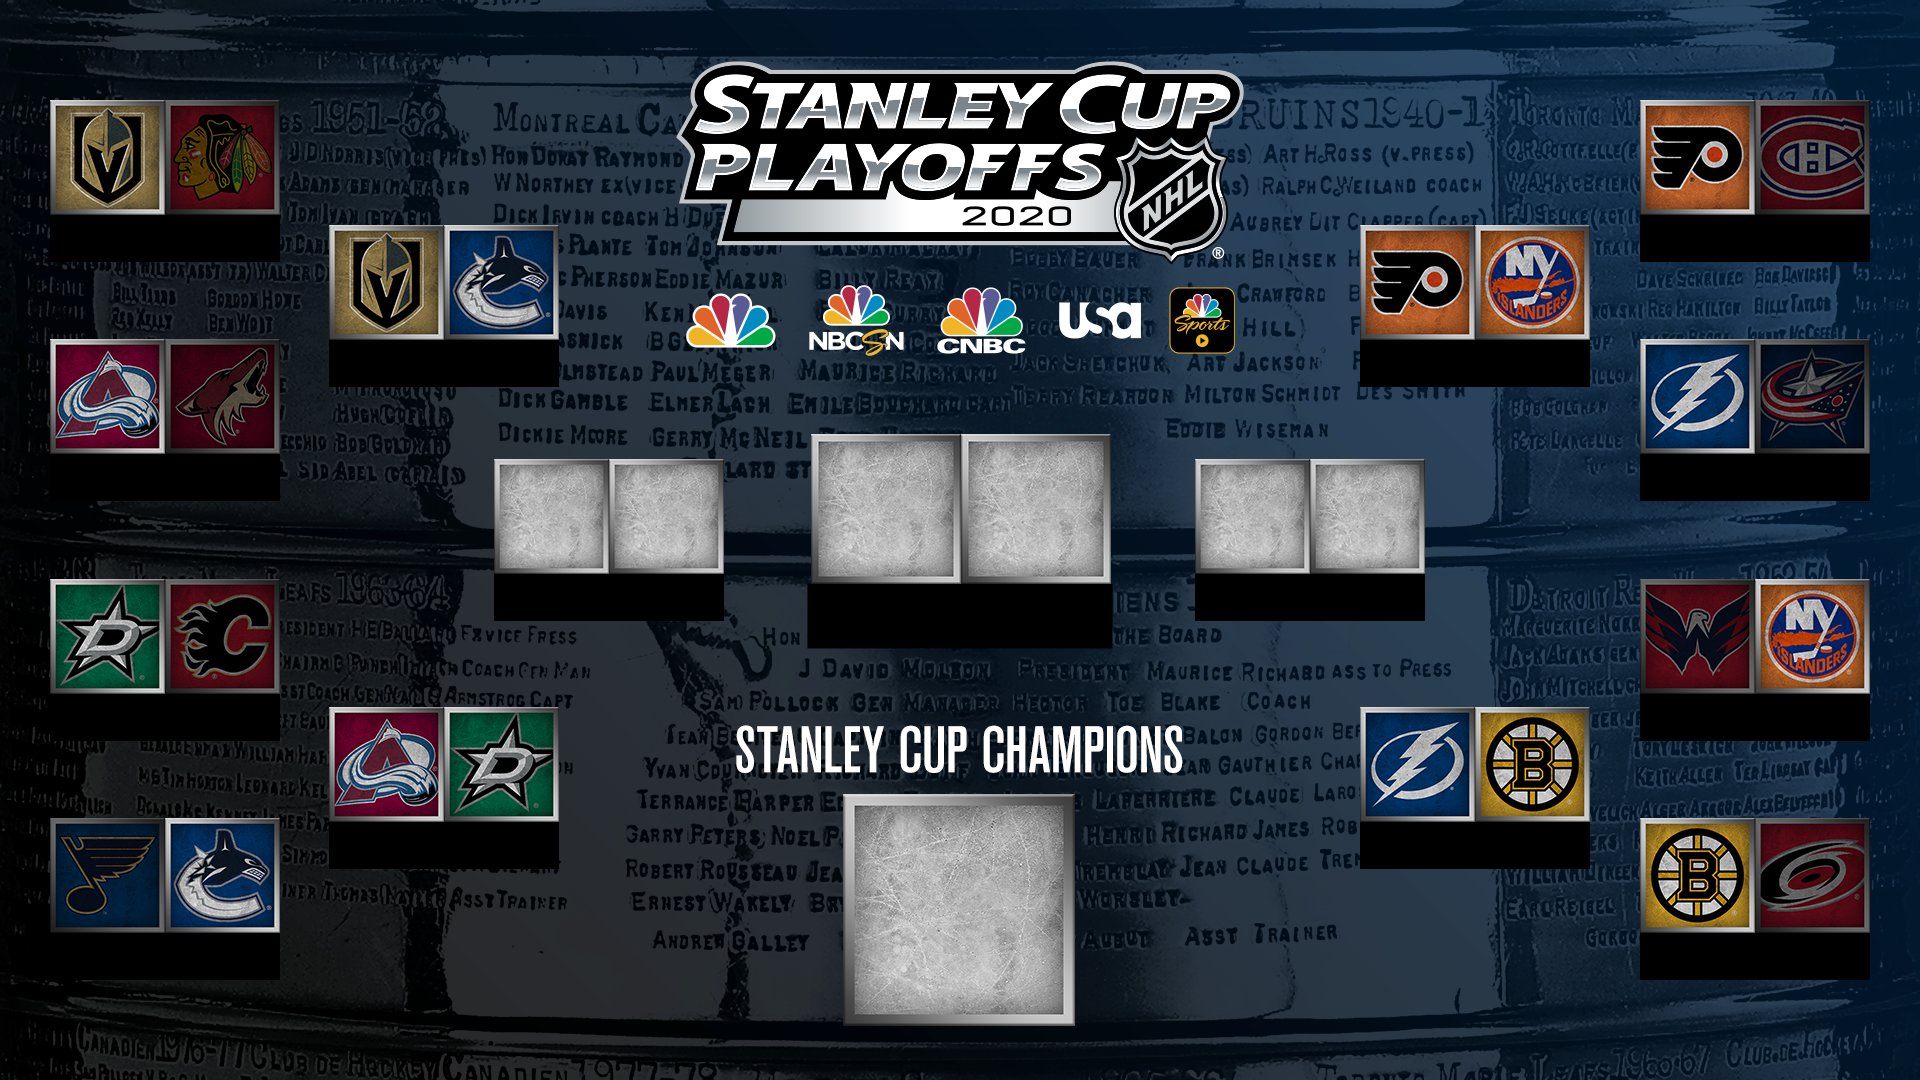 Stanley Cup Second Round schedule